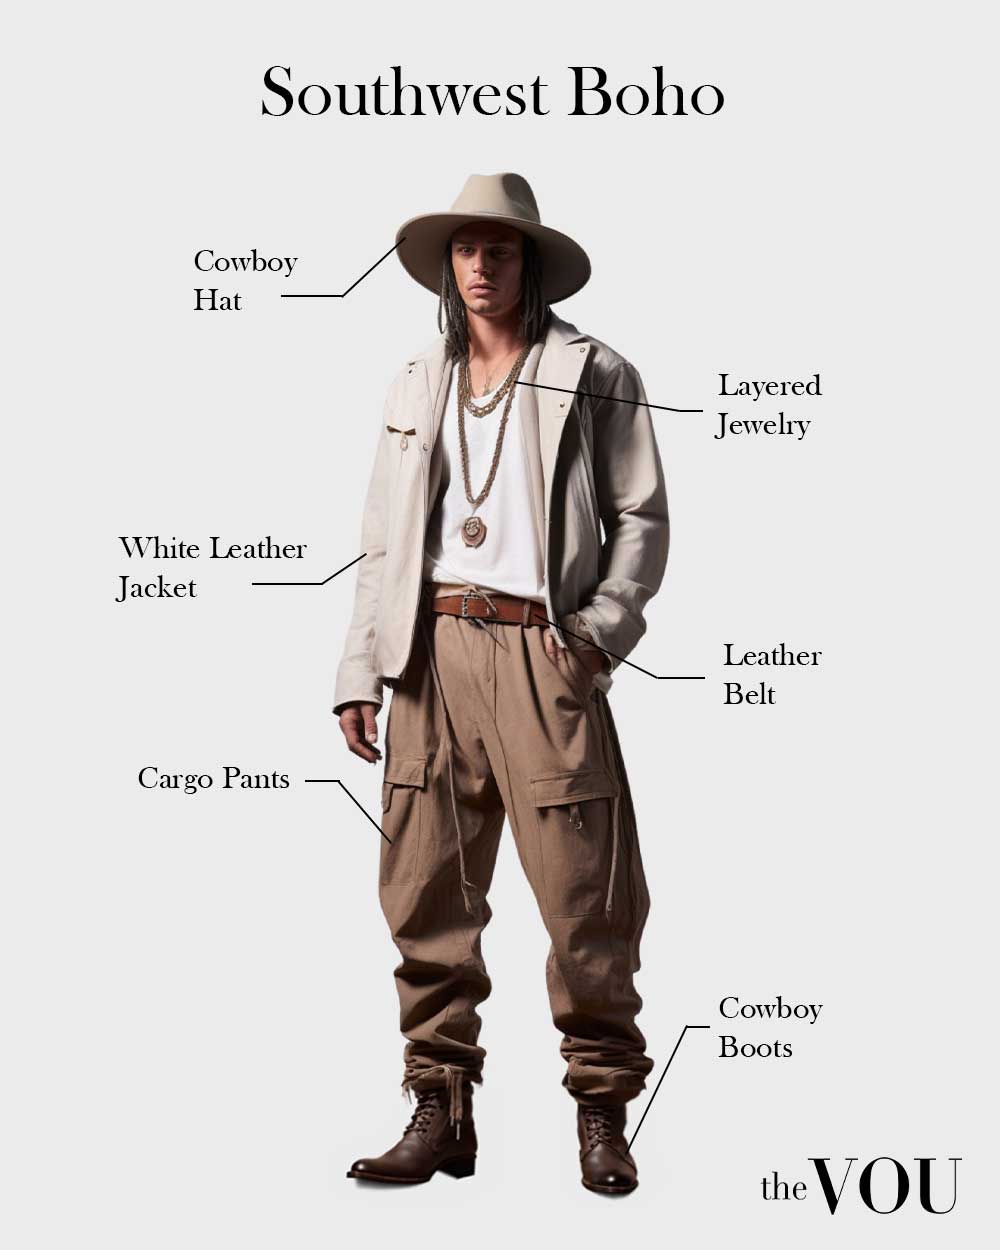 southwest boho outfit for men